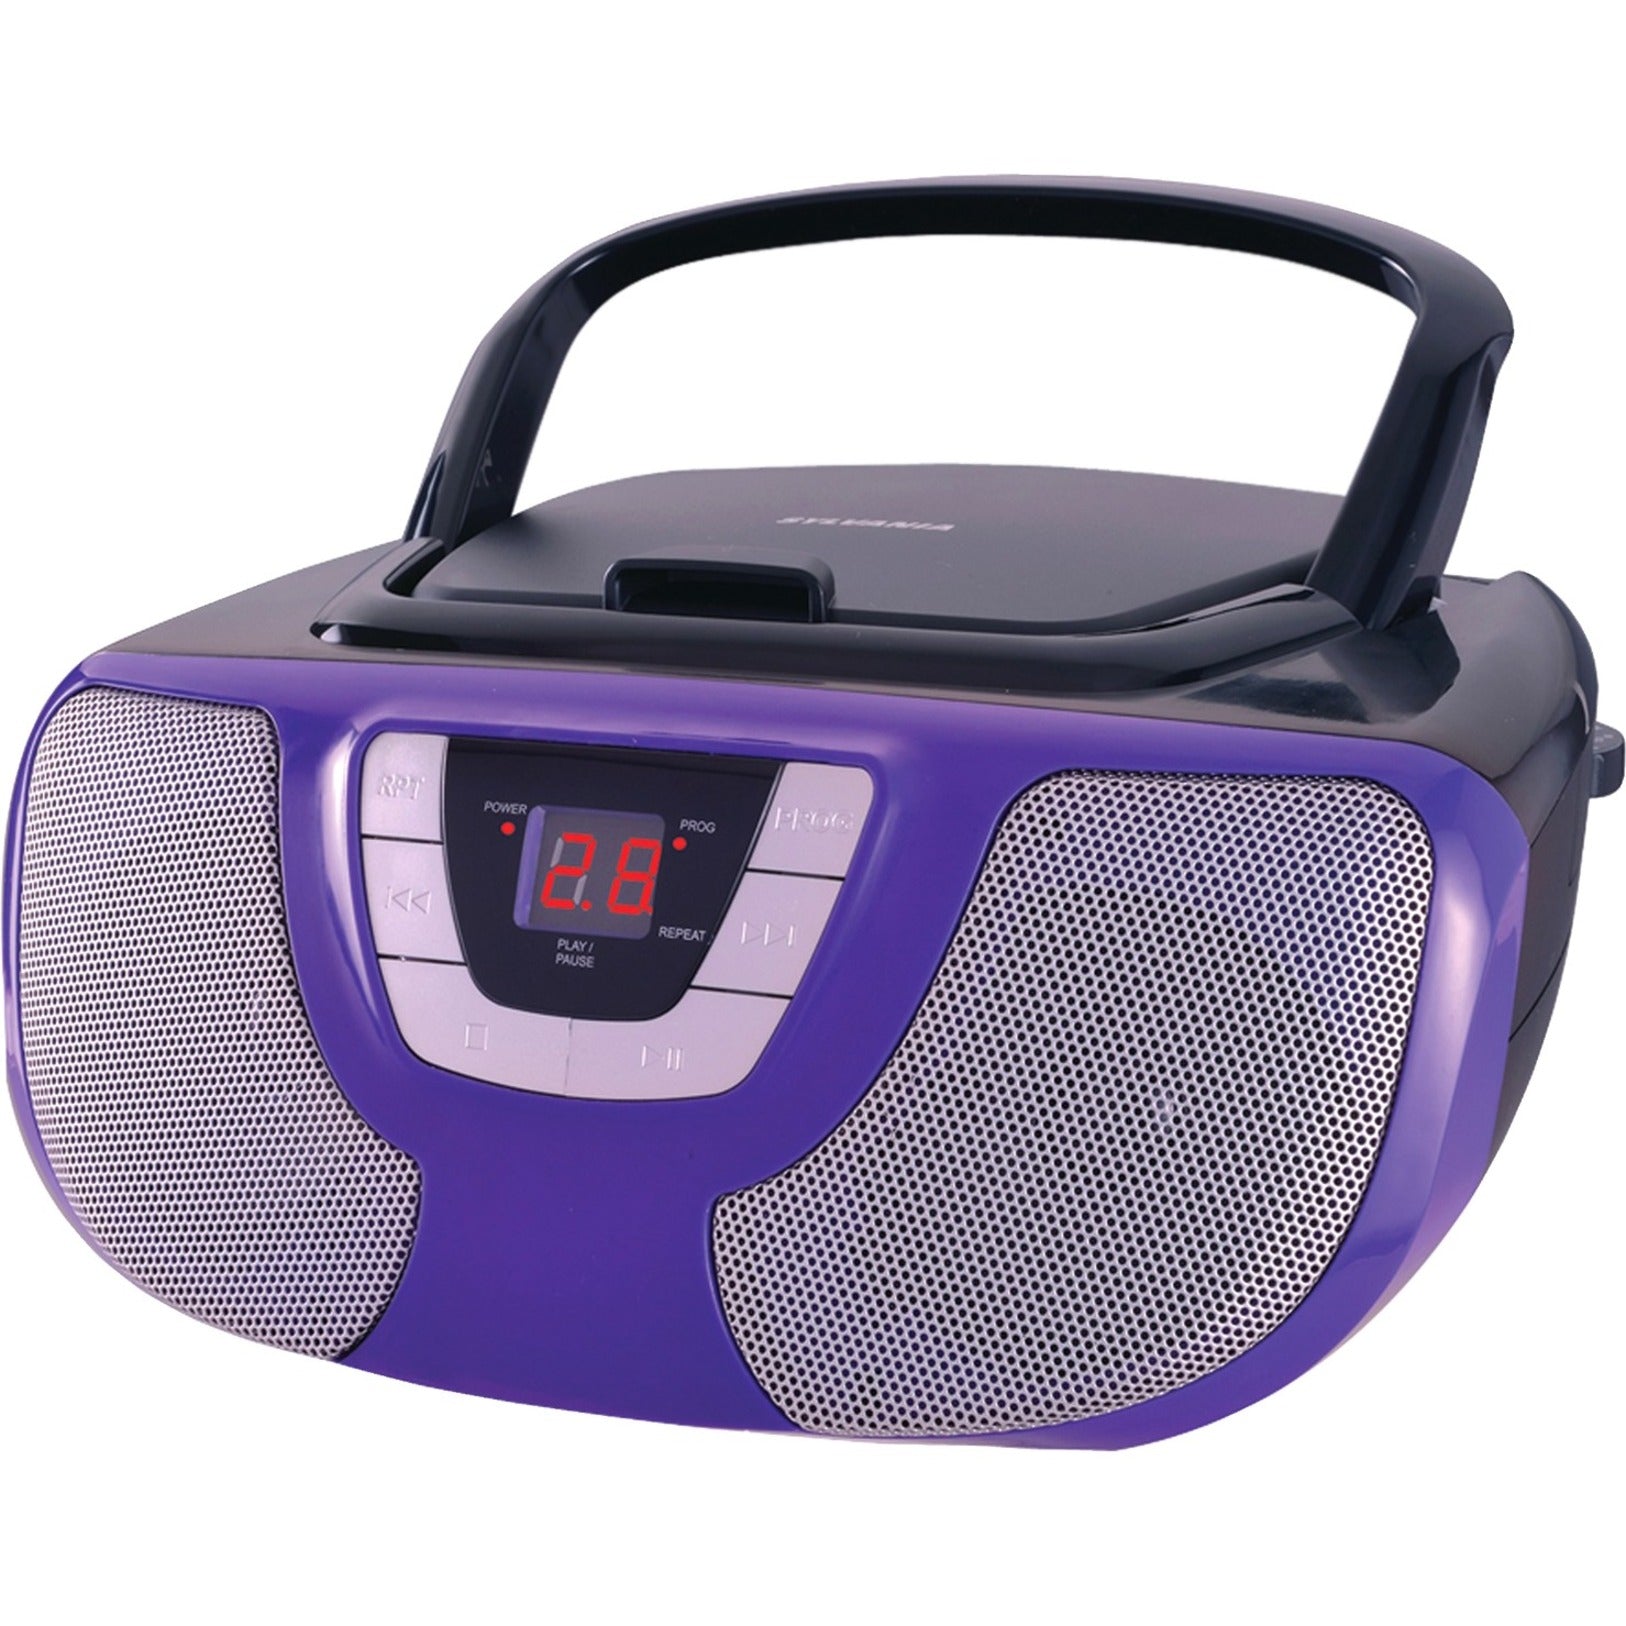 Sylvania SRCD1025-PURPLE Portable CD Radio Boom Box, Stereo Sound, LED Display, Purple